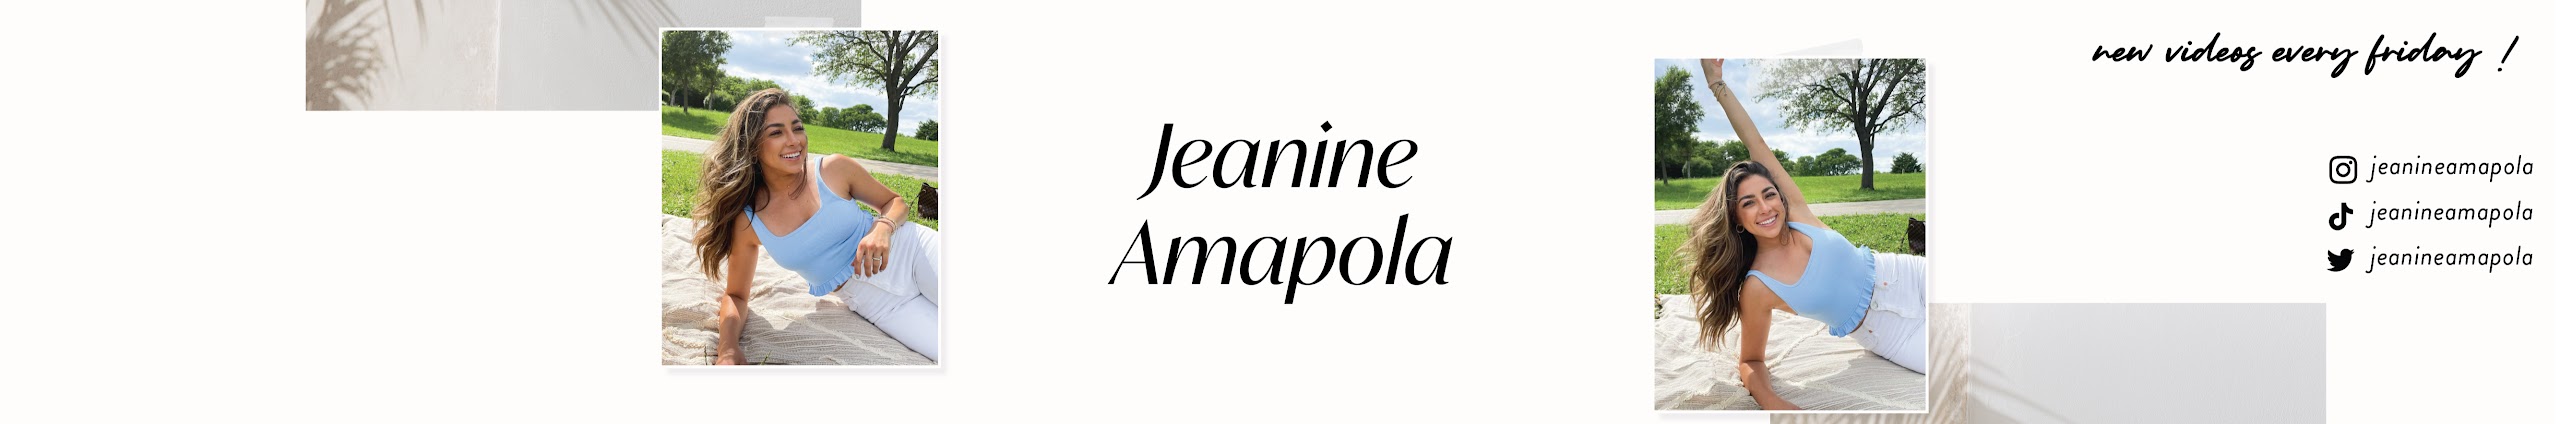 Jeanine-Amapola_banner